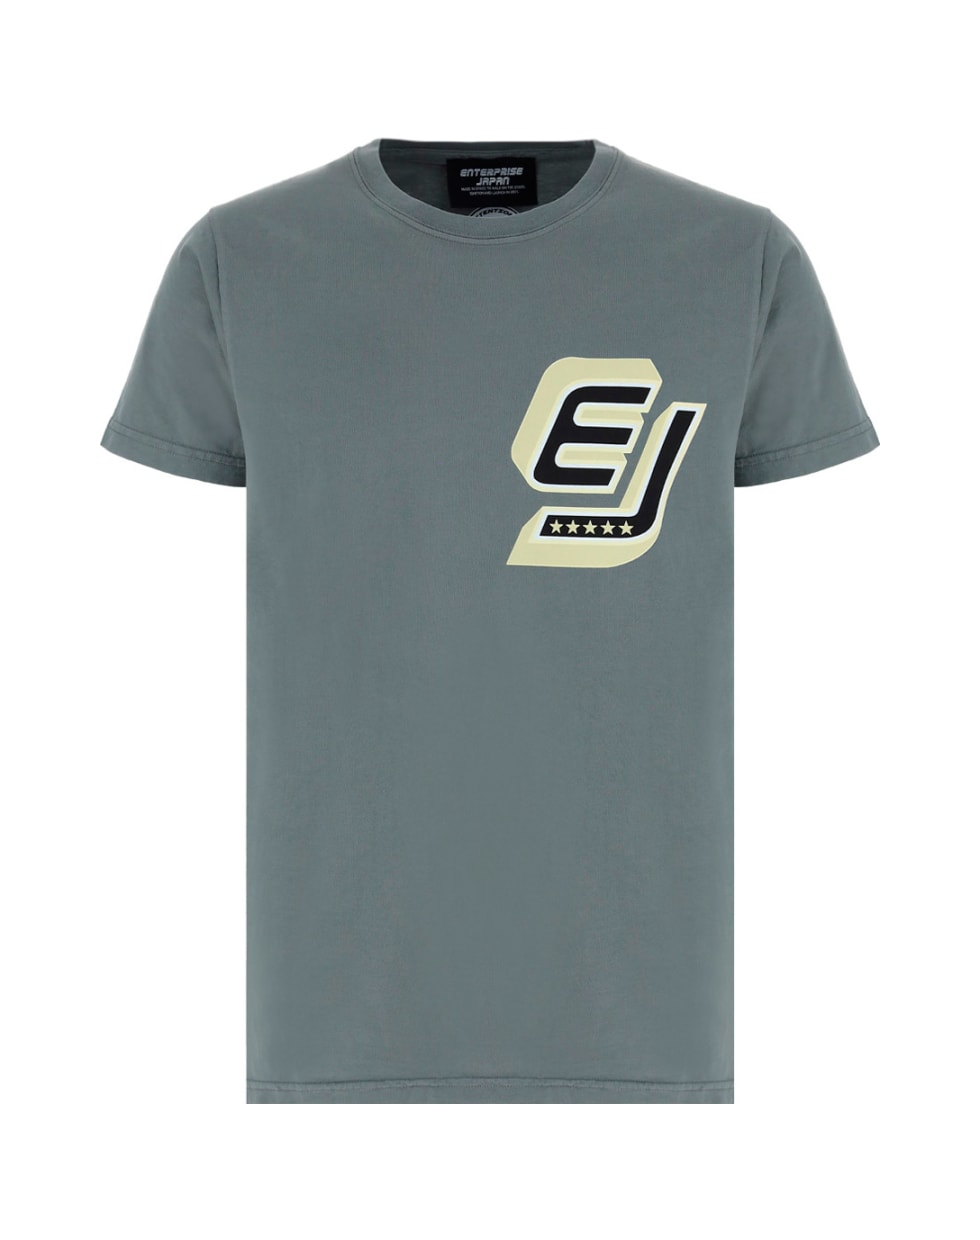 Enterprise Japan T-shirt - Grey